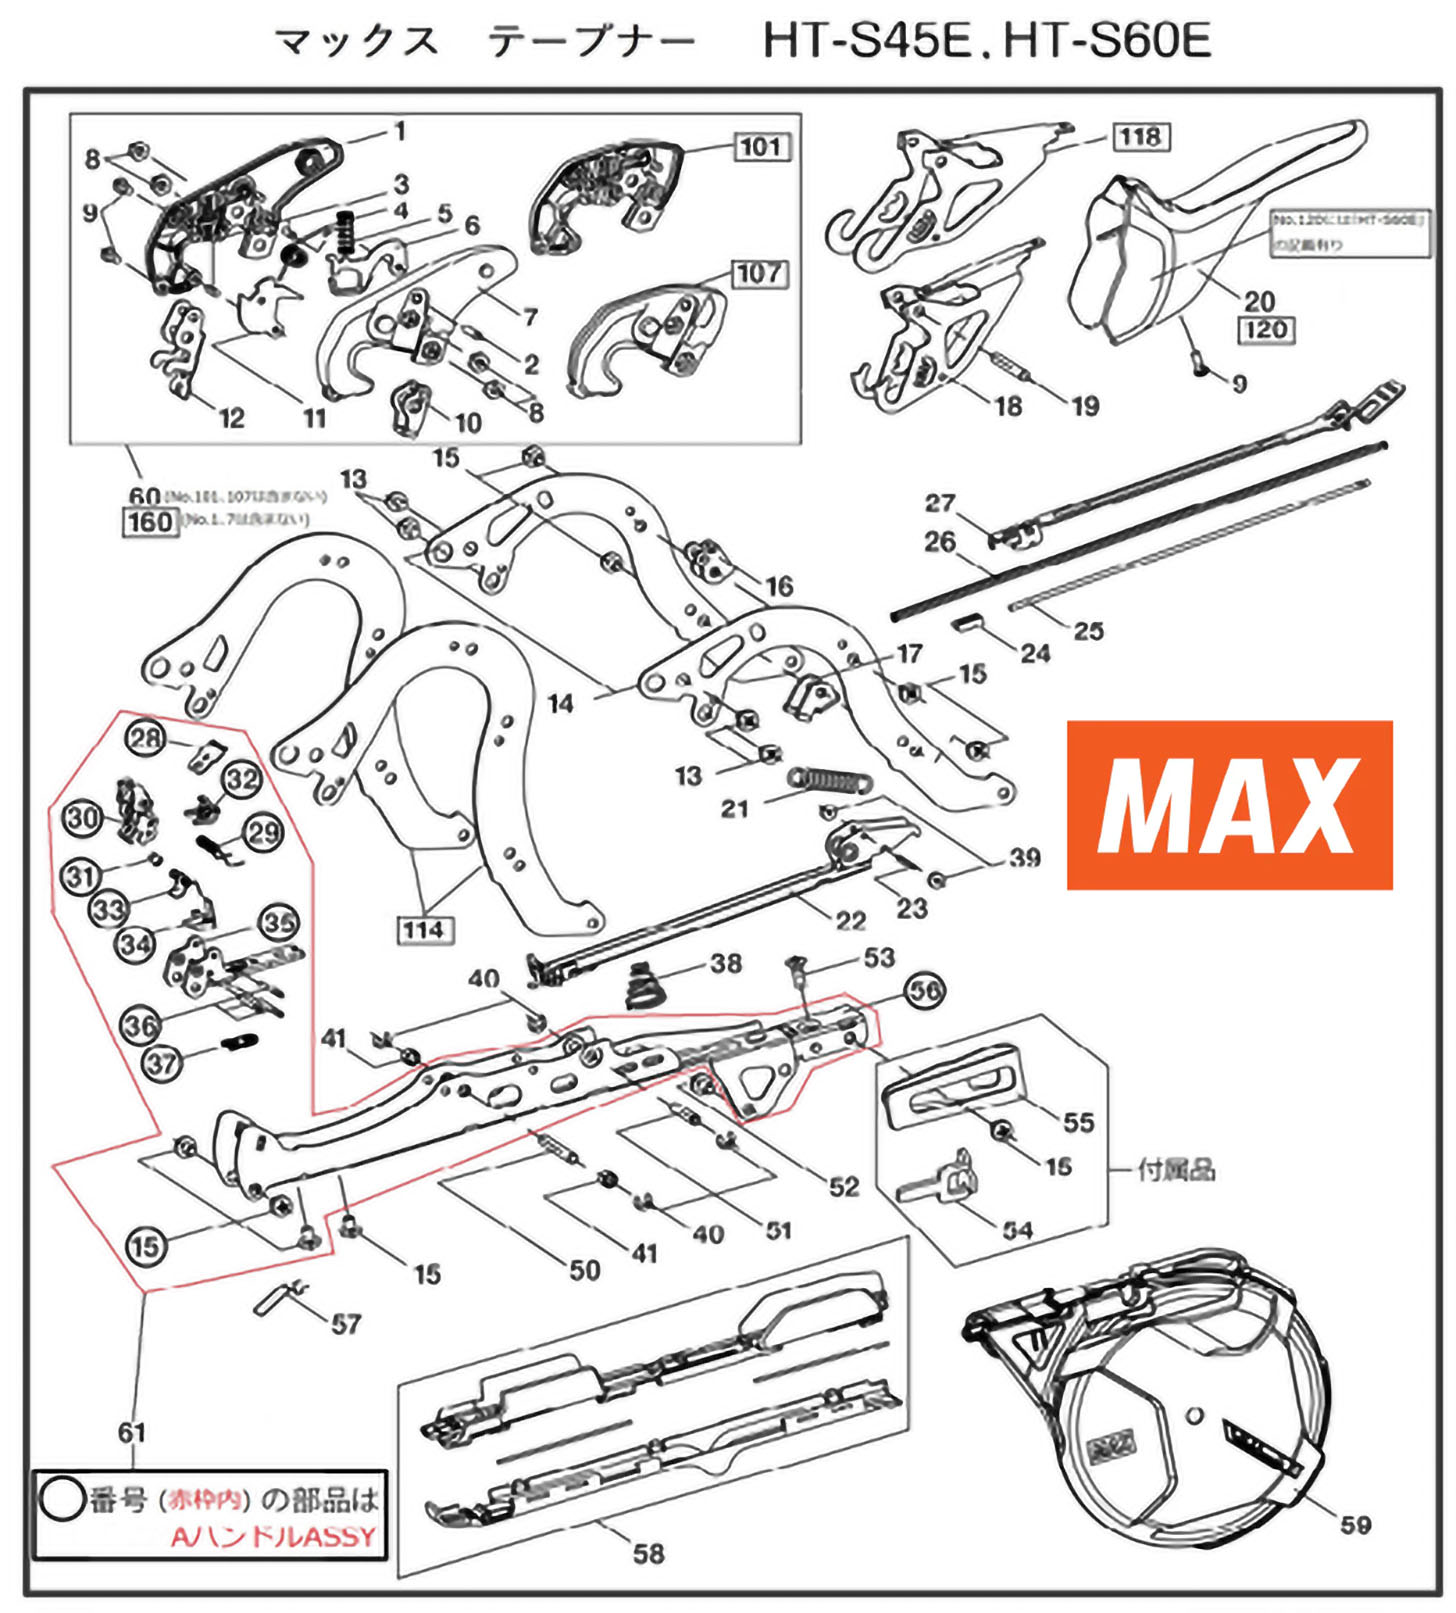 MAX Tapener Part HT70113 TAPE GUIDE S UNIT(HT-S) Fits MAX HT-S45E #30